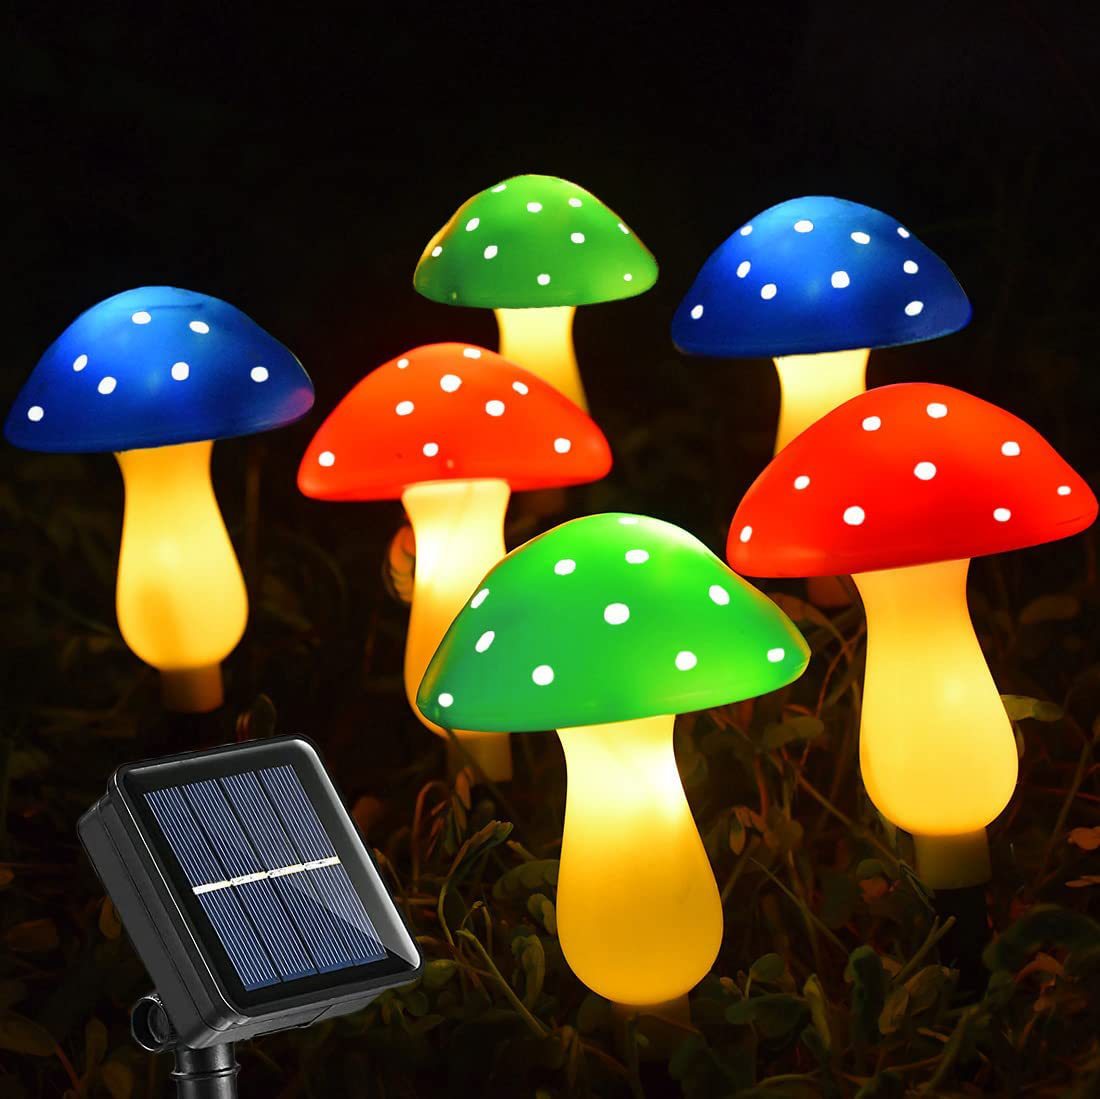 Garden Decoraion Outdoor 3/6 IN 1 Mushroom Waterproof Solar Light Fairy Lawn Decor For Landspace Yard Backyard Path Solar Lamp